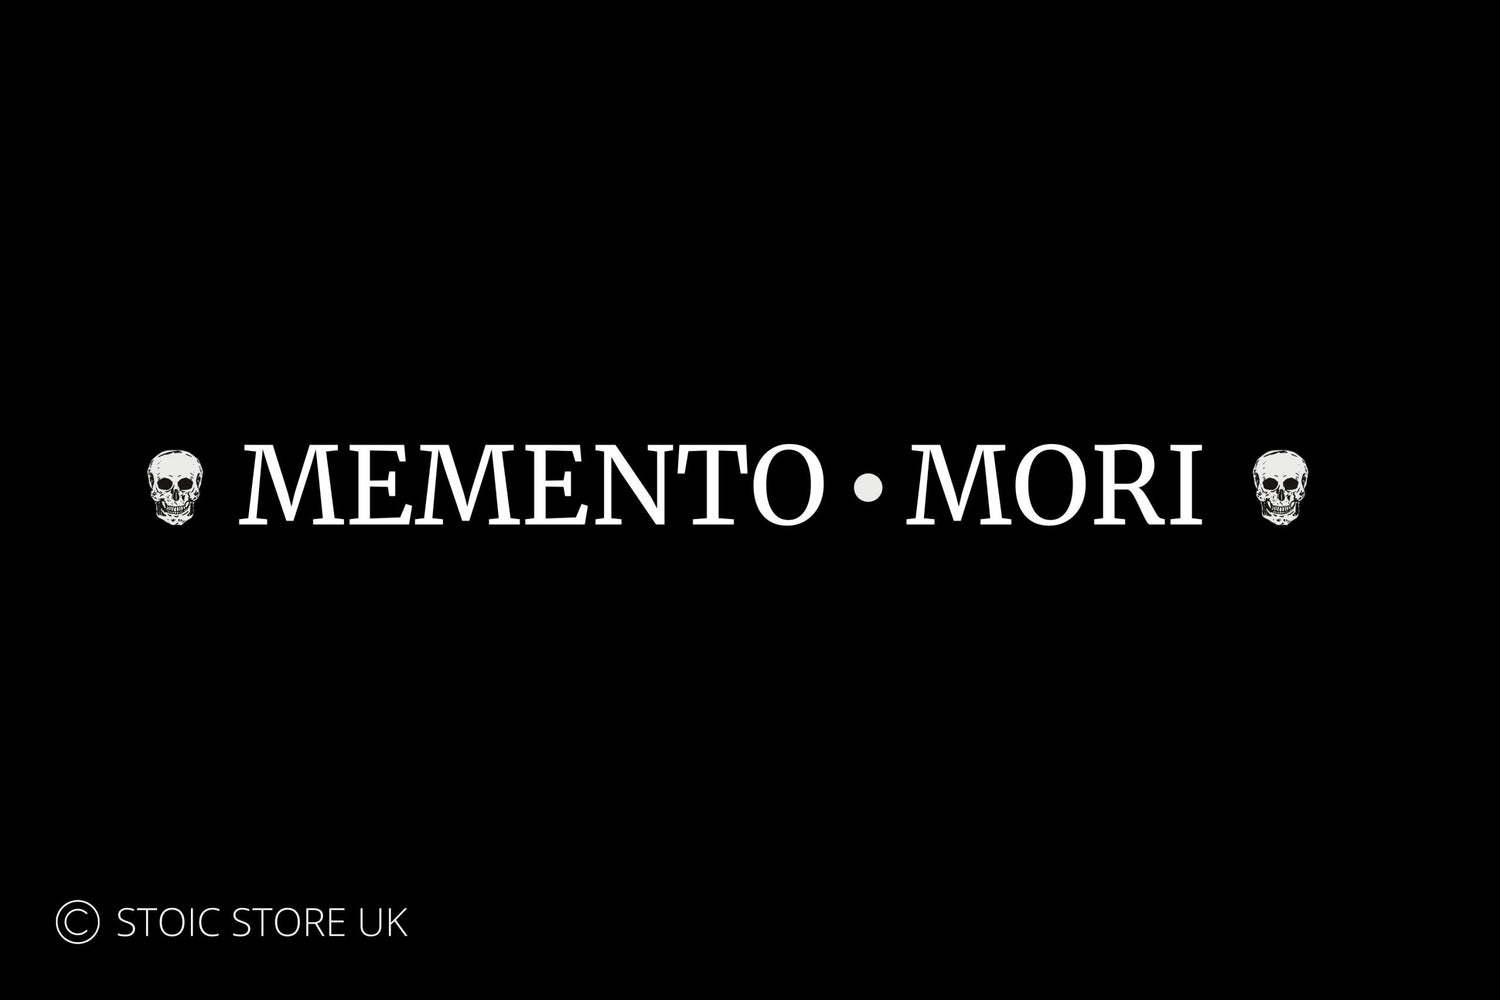 MEMENTO MORI TEXT RING (copyrighted)